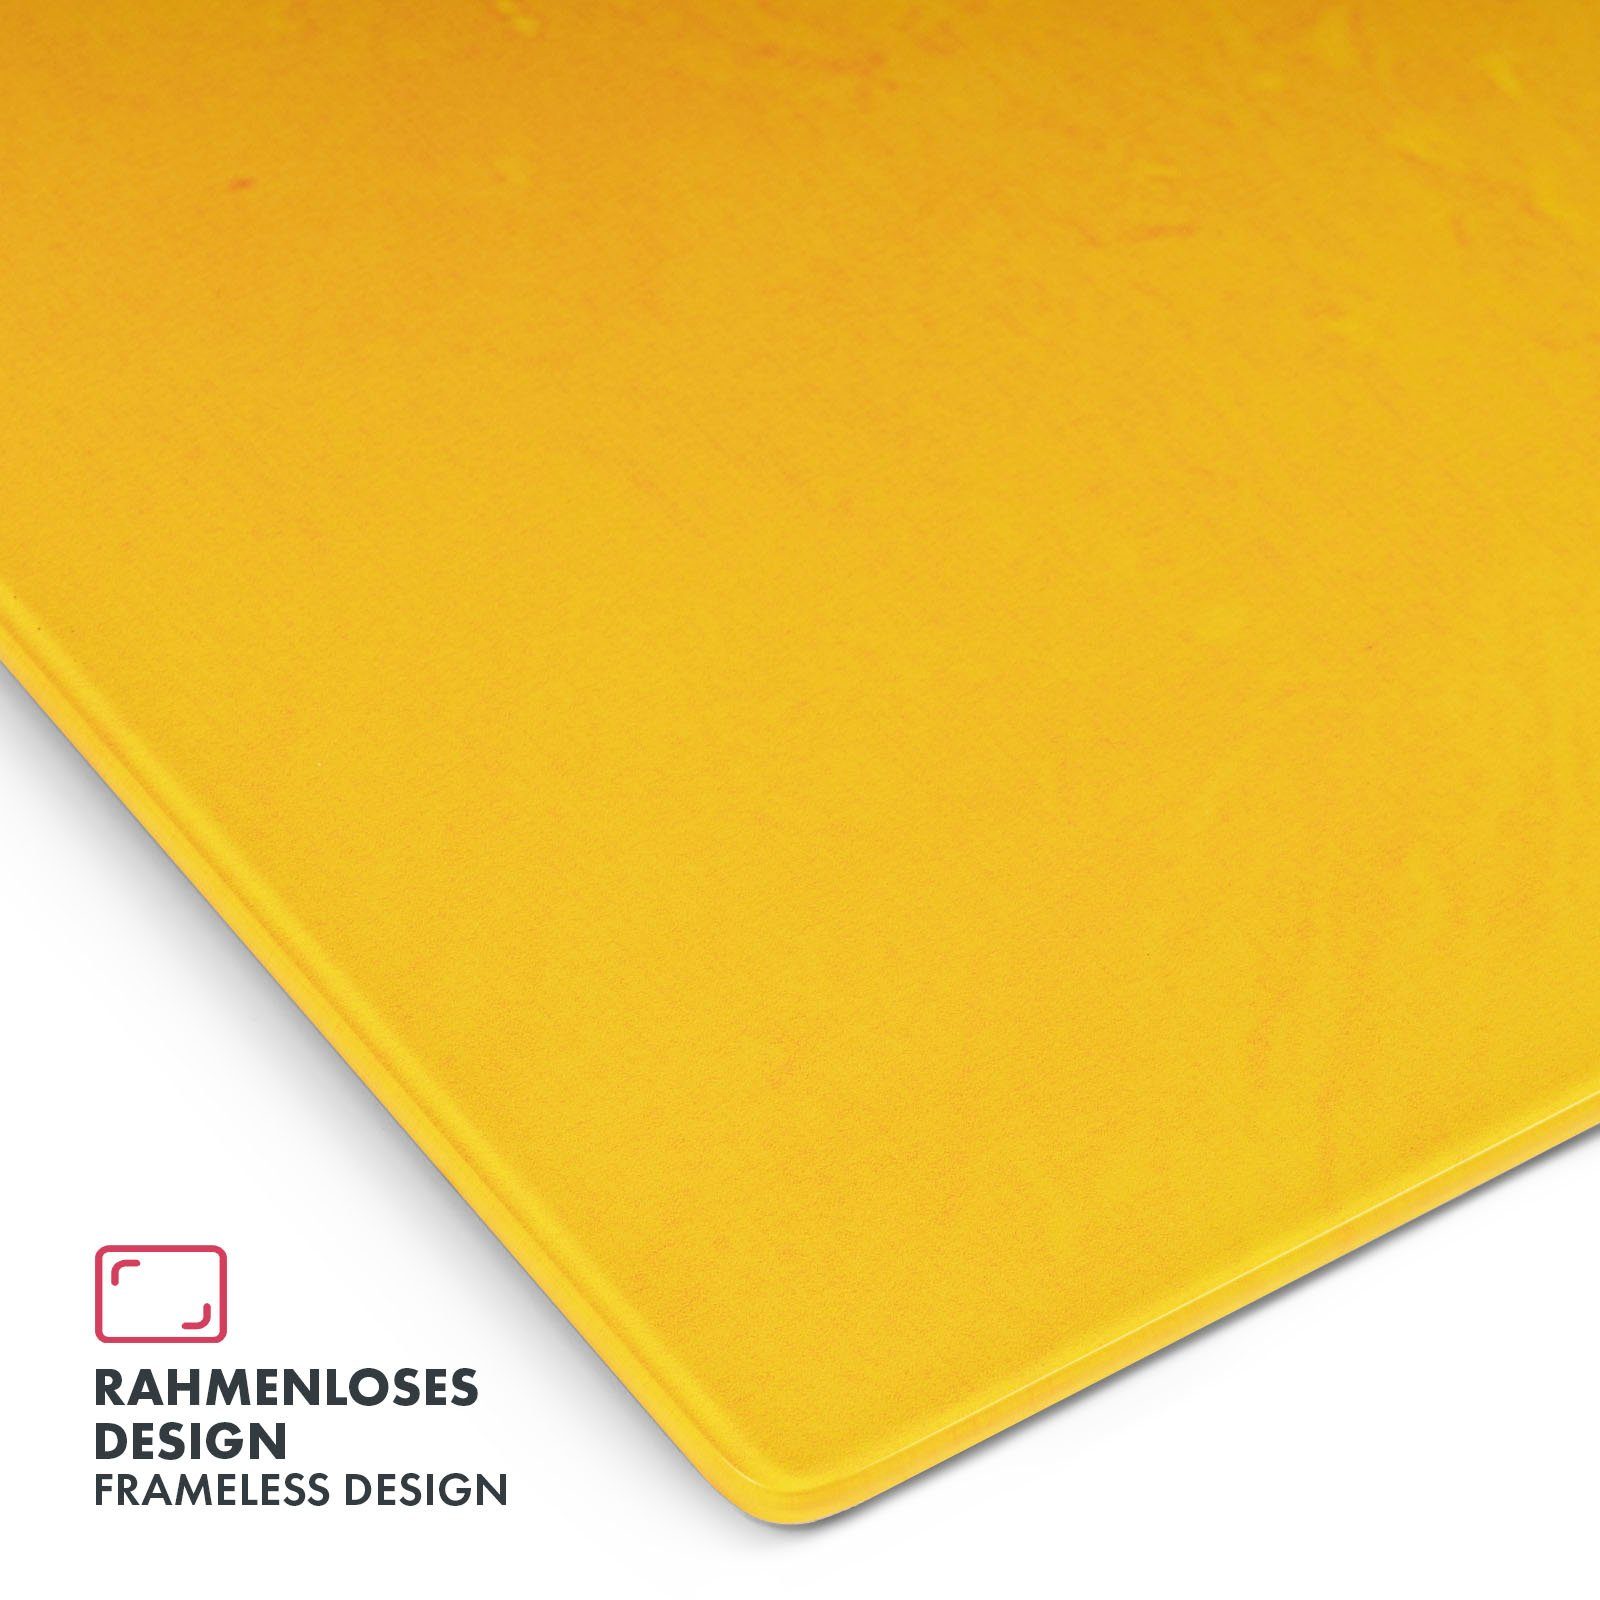 Mit Farben Design-Glas-Memoboard 2 & Montagematerial, Gelb In Magneten Whiff, Kubus Memoboard